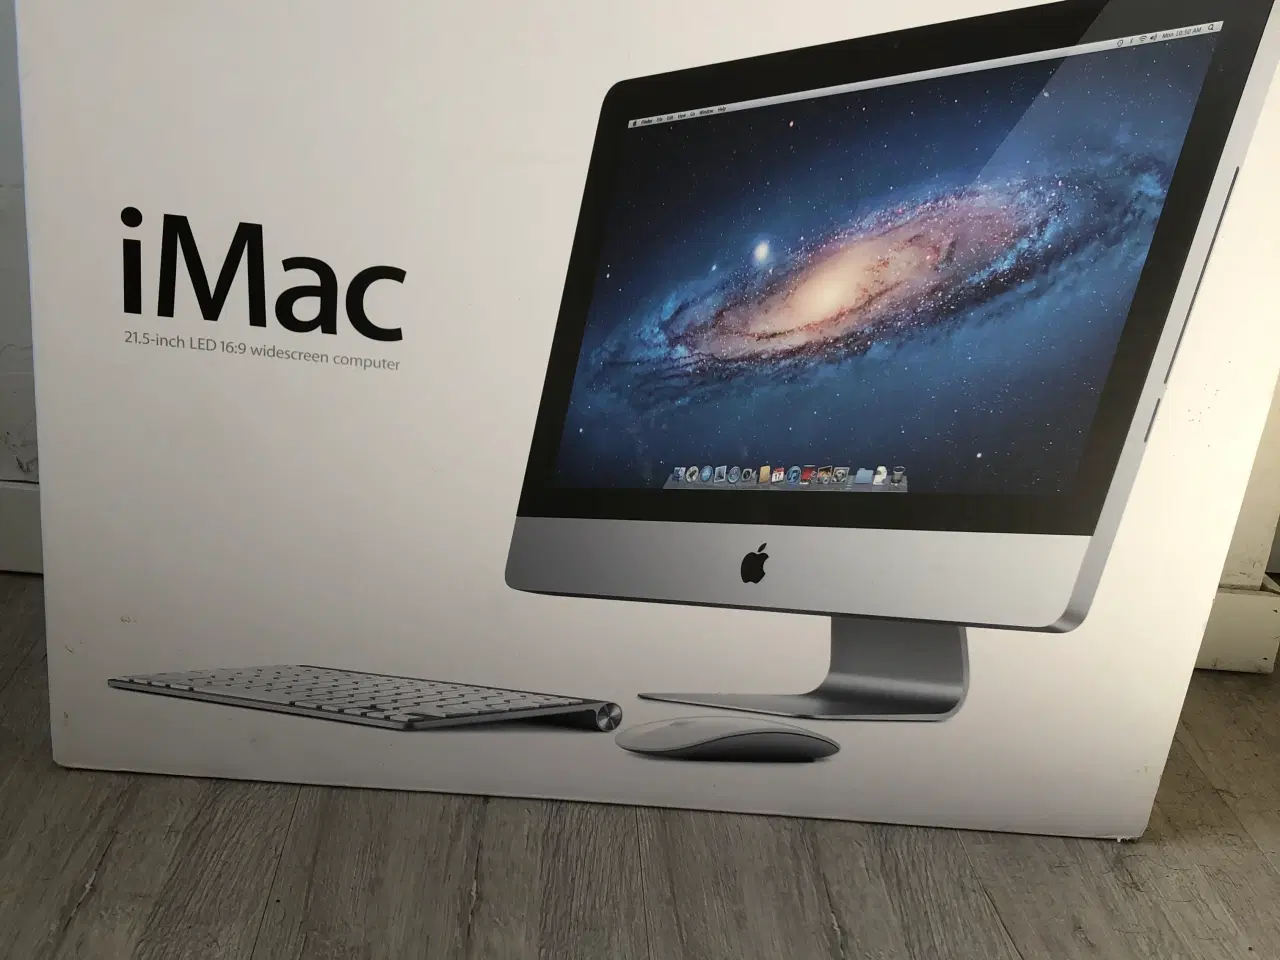 Billede 1 - iMac 21,5-inch LED 16:9 widescreen computer 